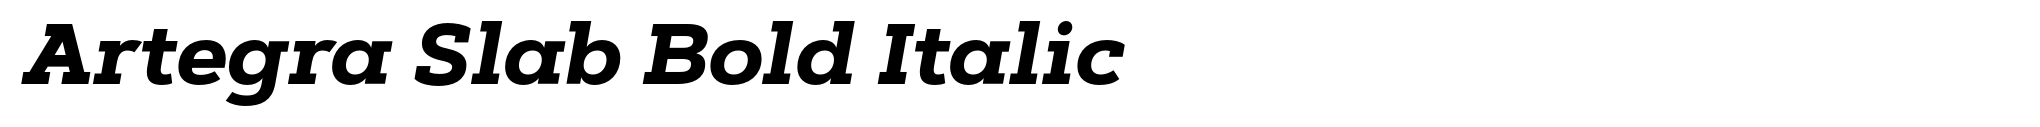 Artegra Slab Bold Italic image